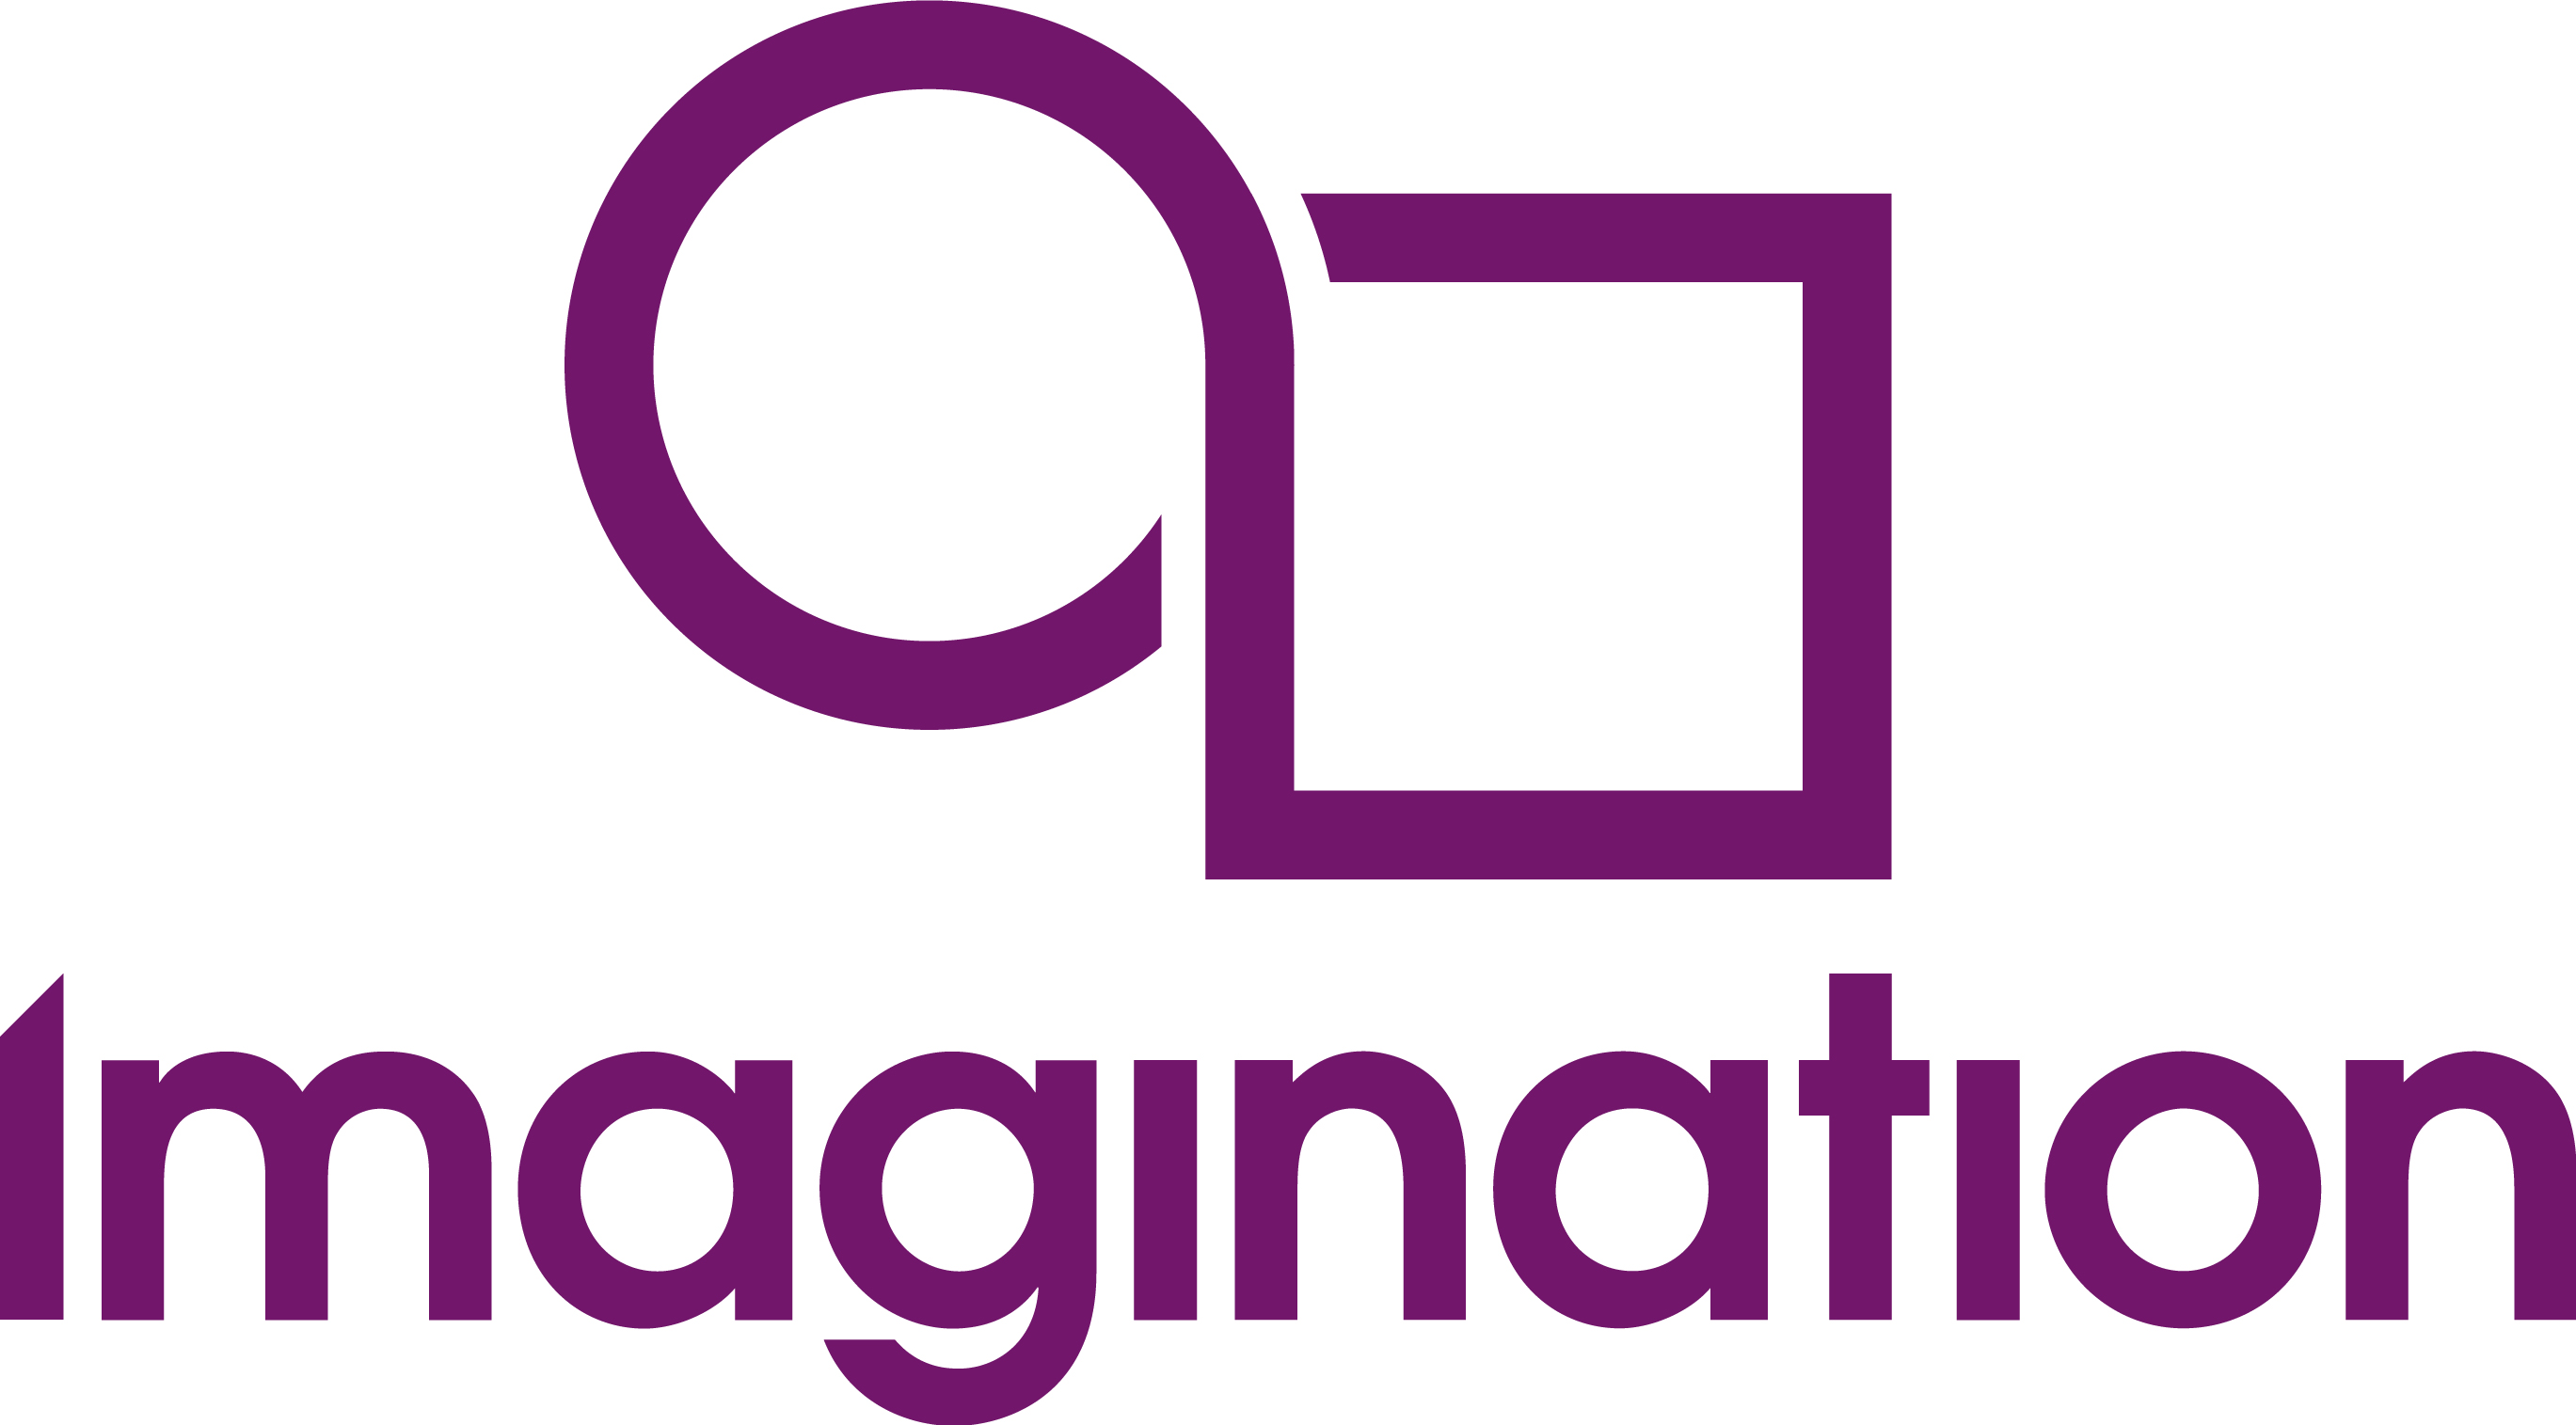 Imagination Technologies Group